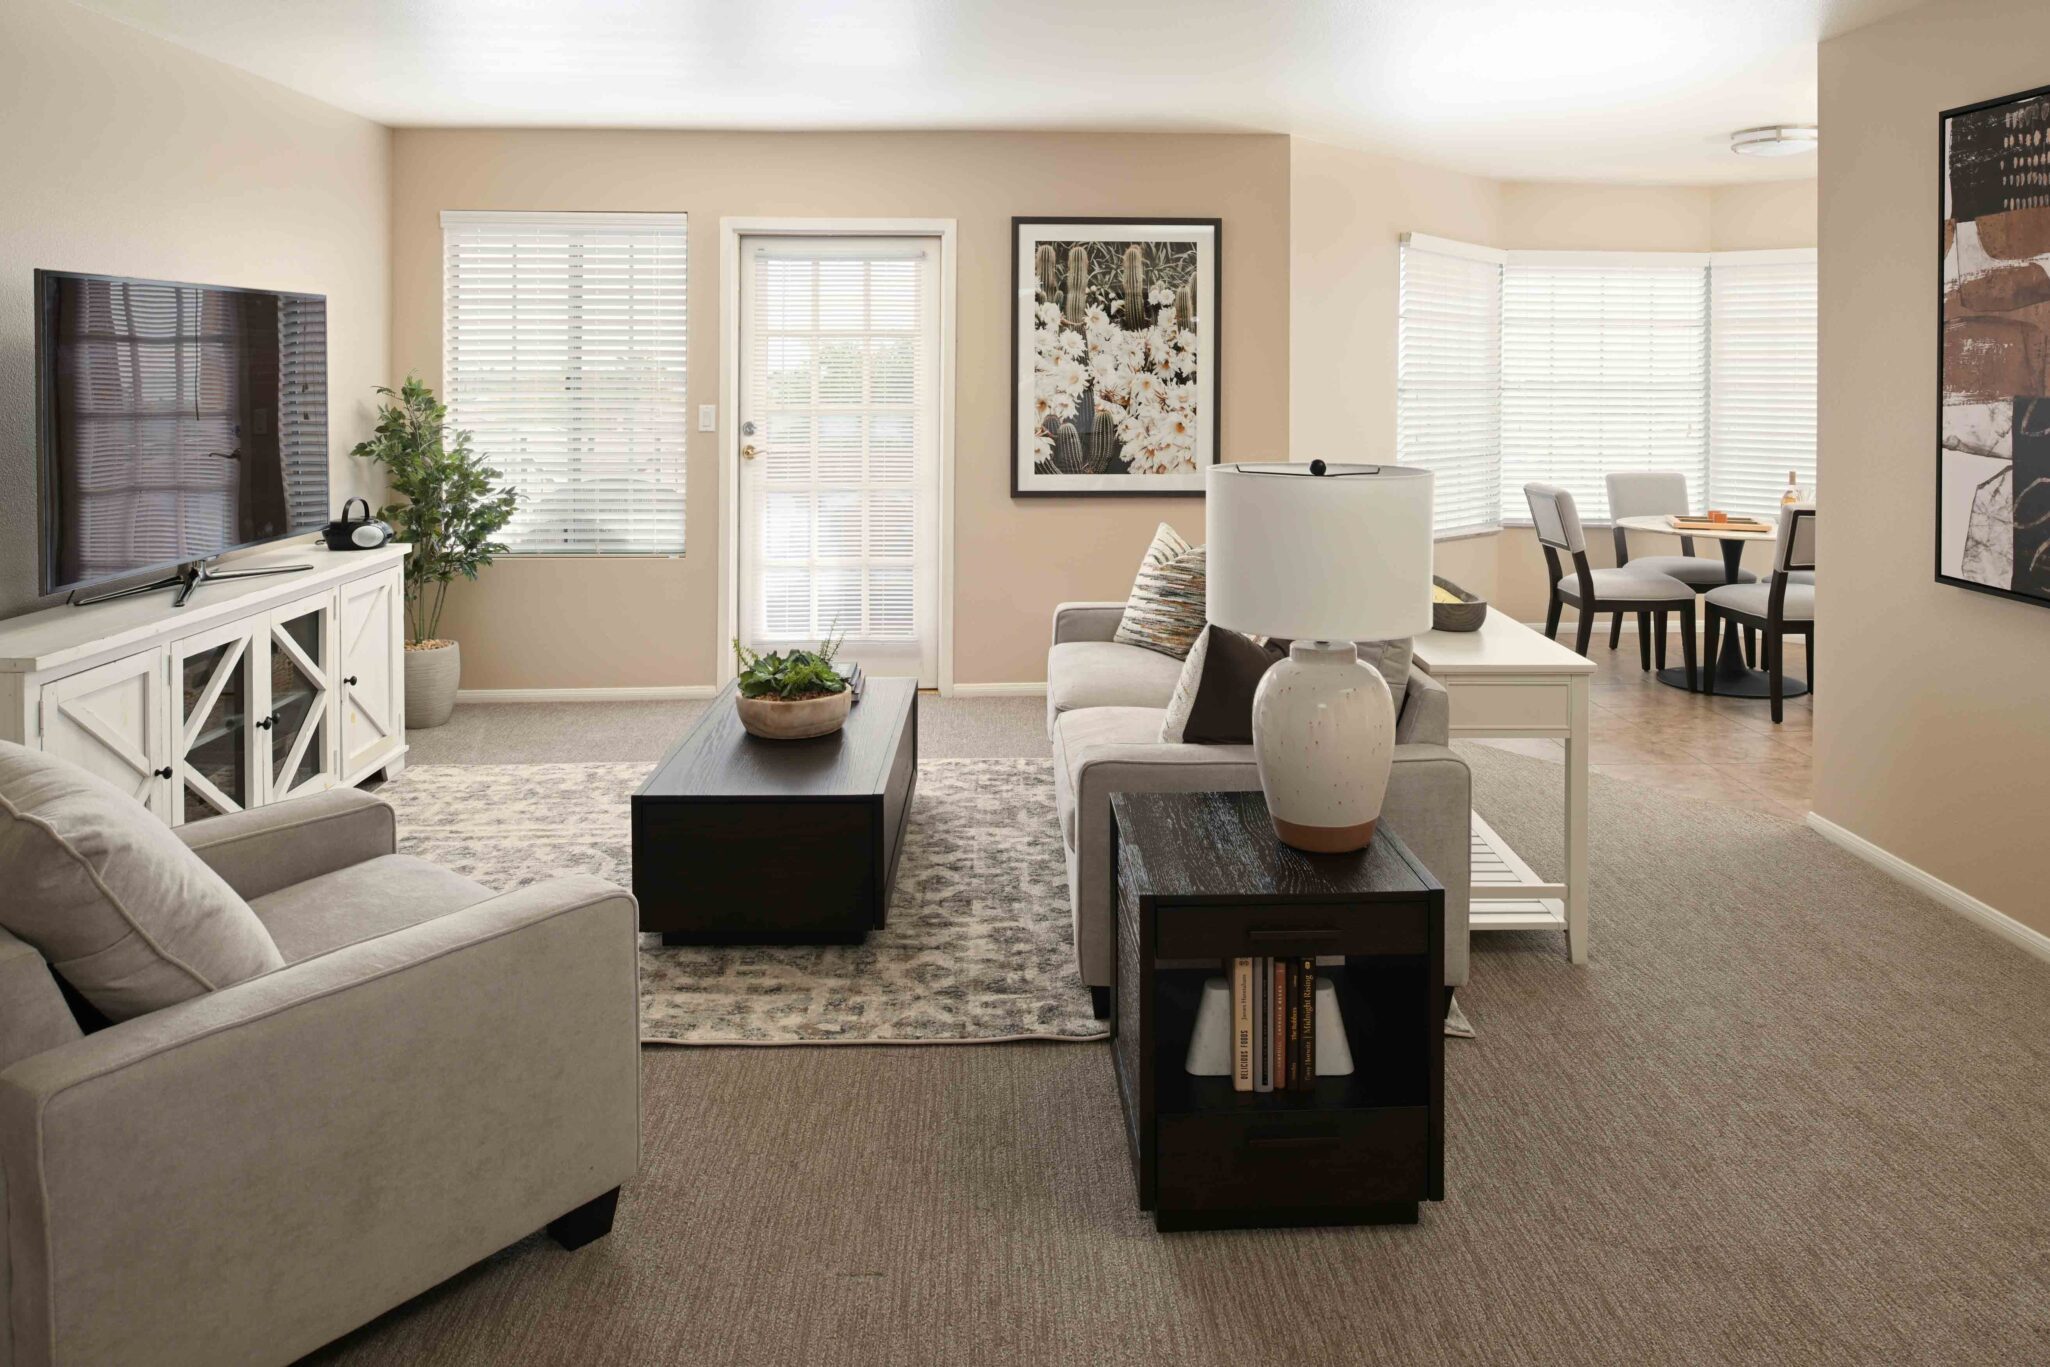 Luxury Senior Living Floor Plans The Heritage Tradition